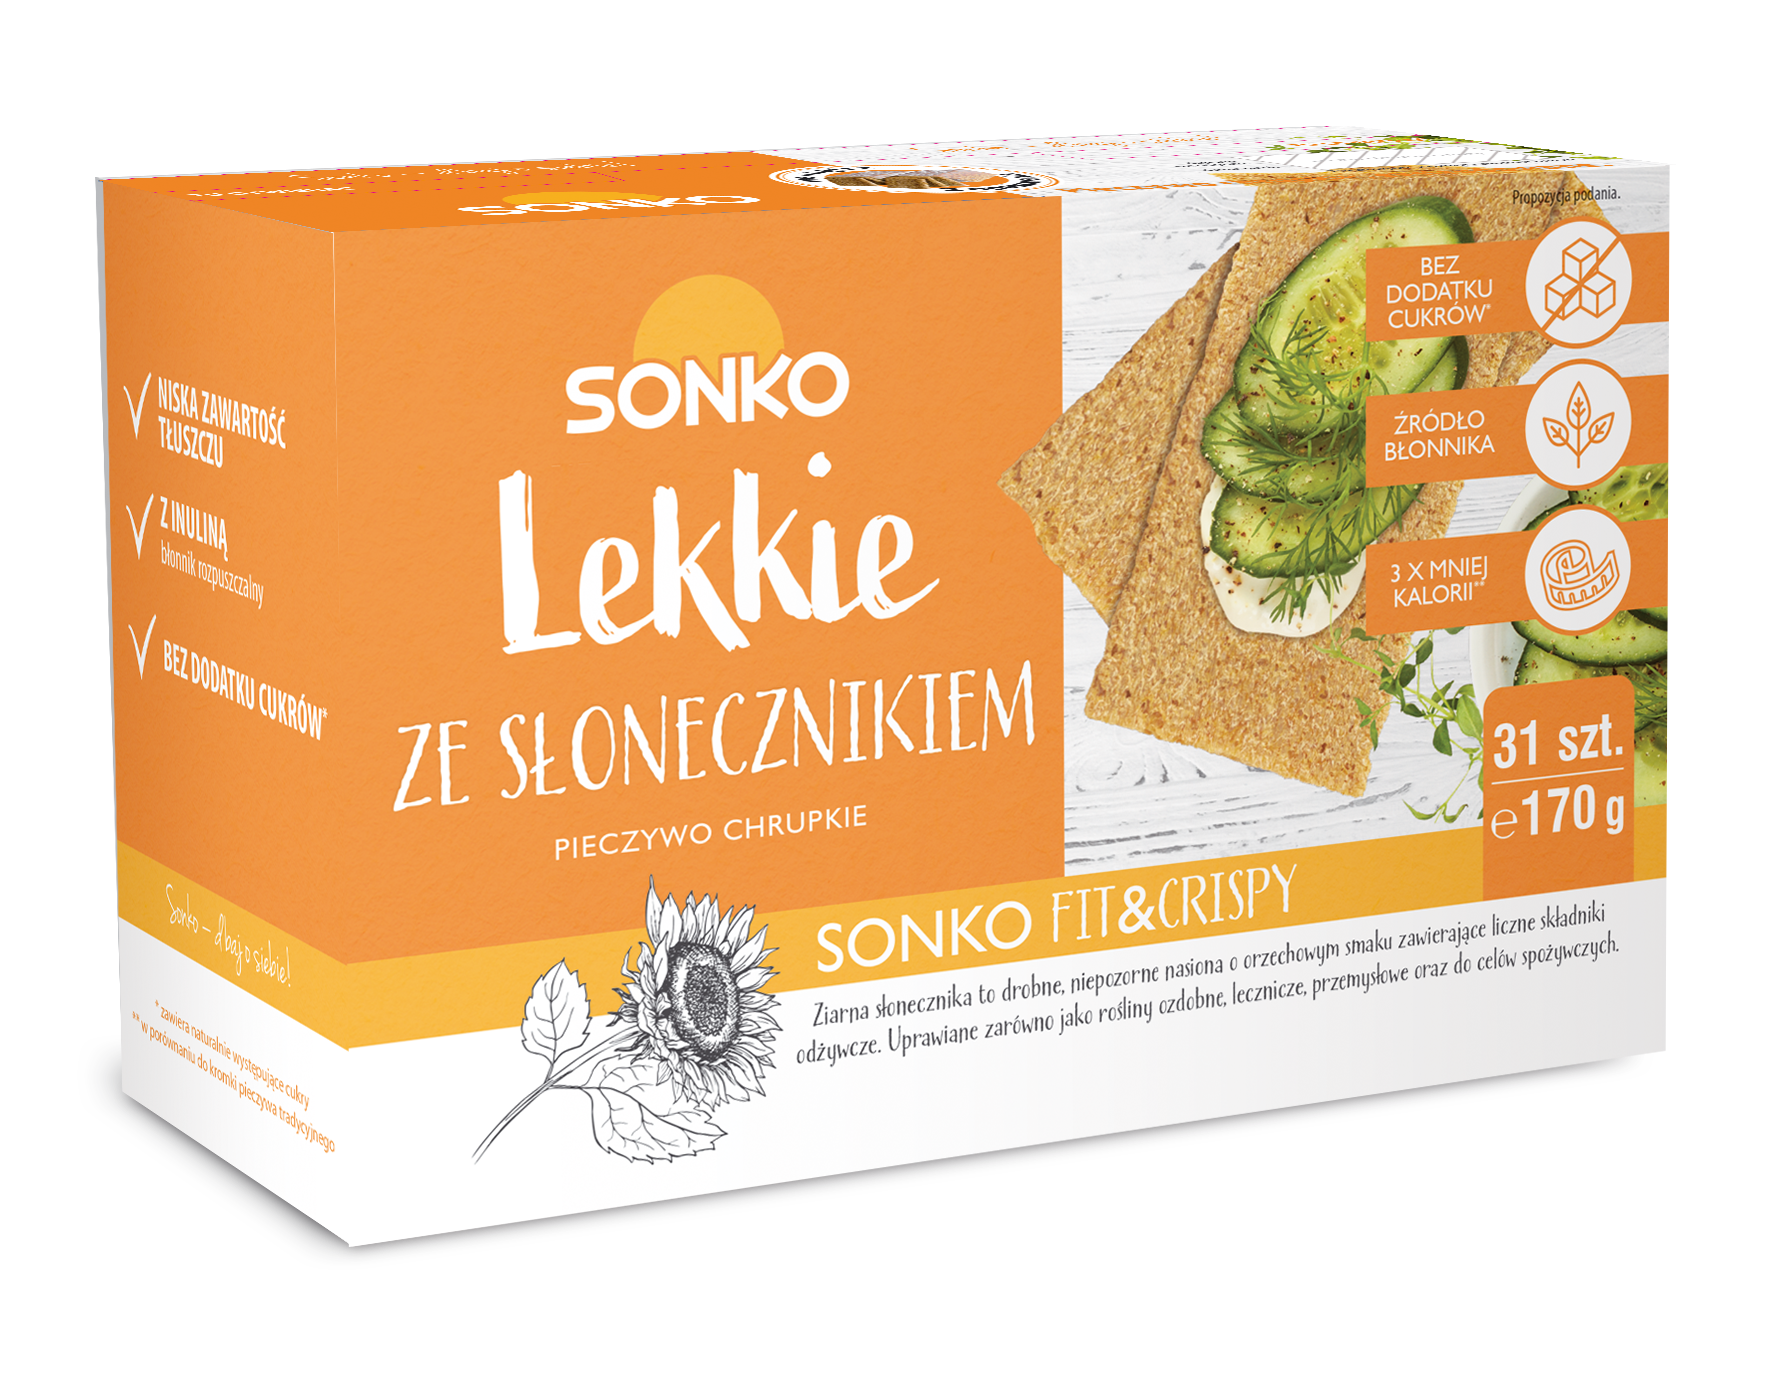 sonko light bread with sunflower seeds